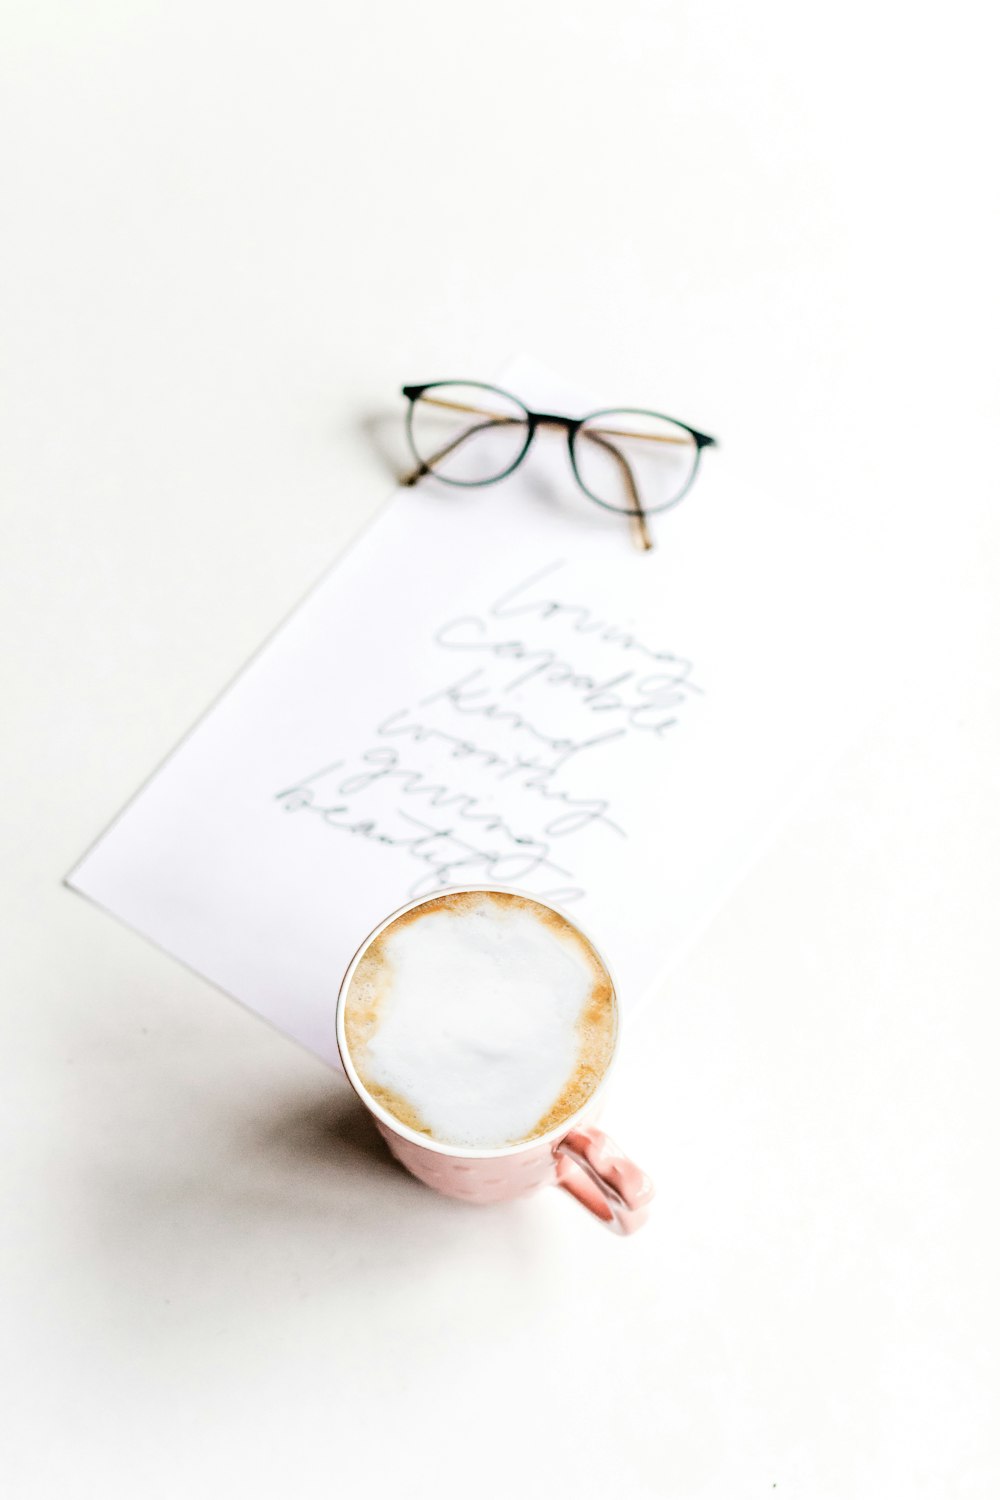 white ceramic mug with coffee on white paper